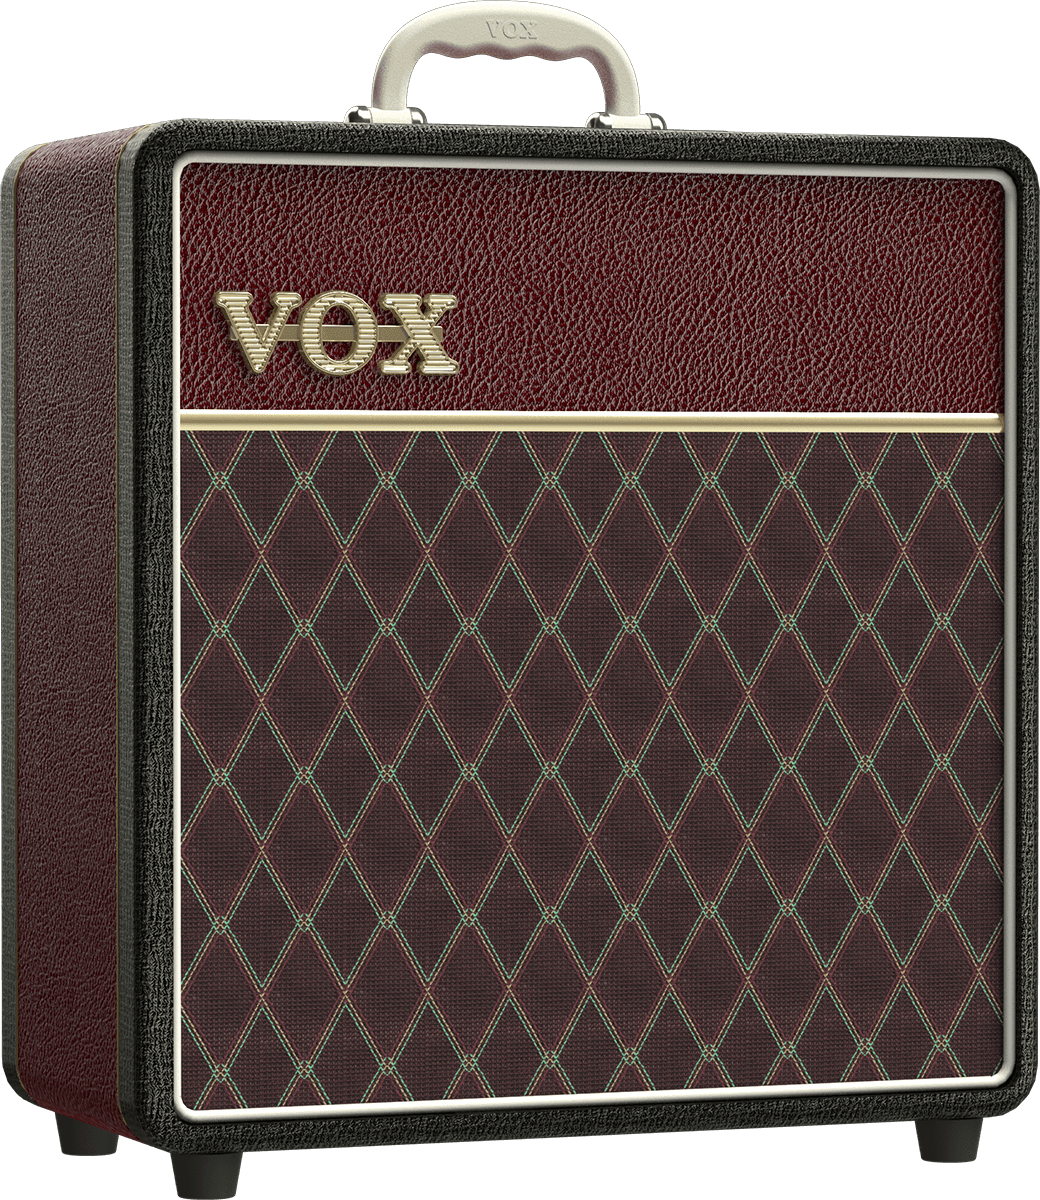 Vox Ac4c1-12 Ttbm Ltd Custom 1x12 4w Two-tone Black & Maroon - Electric guitar combo amp - Main picture